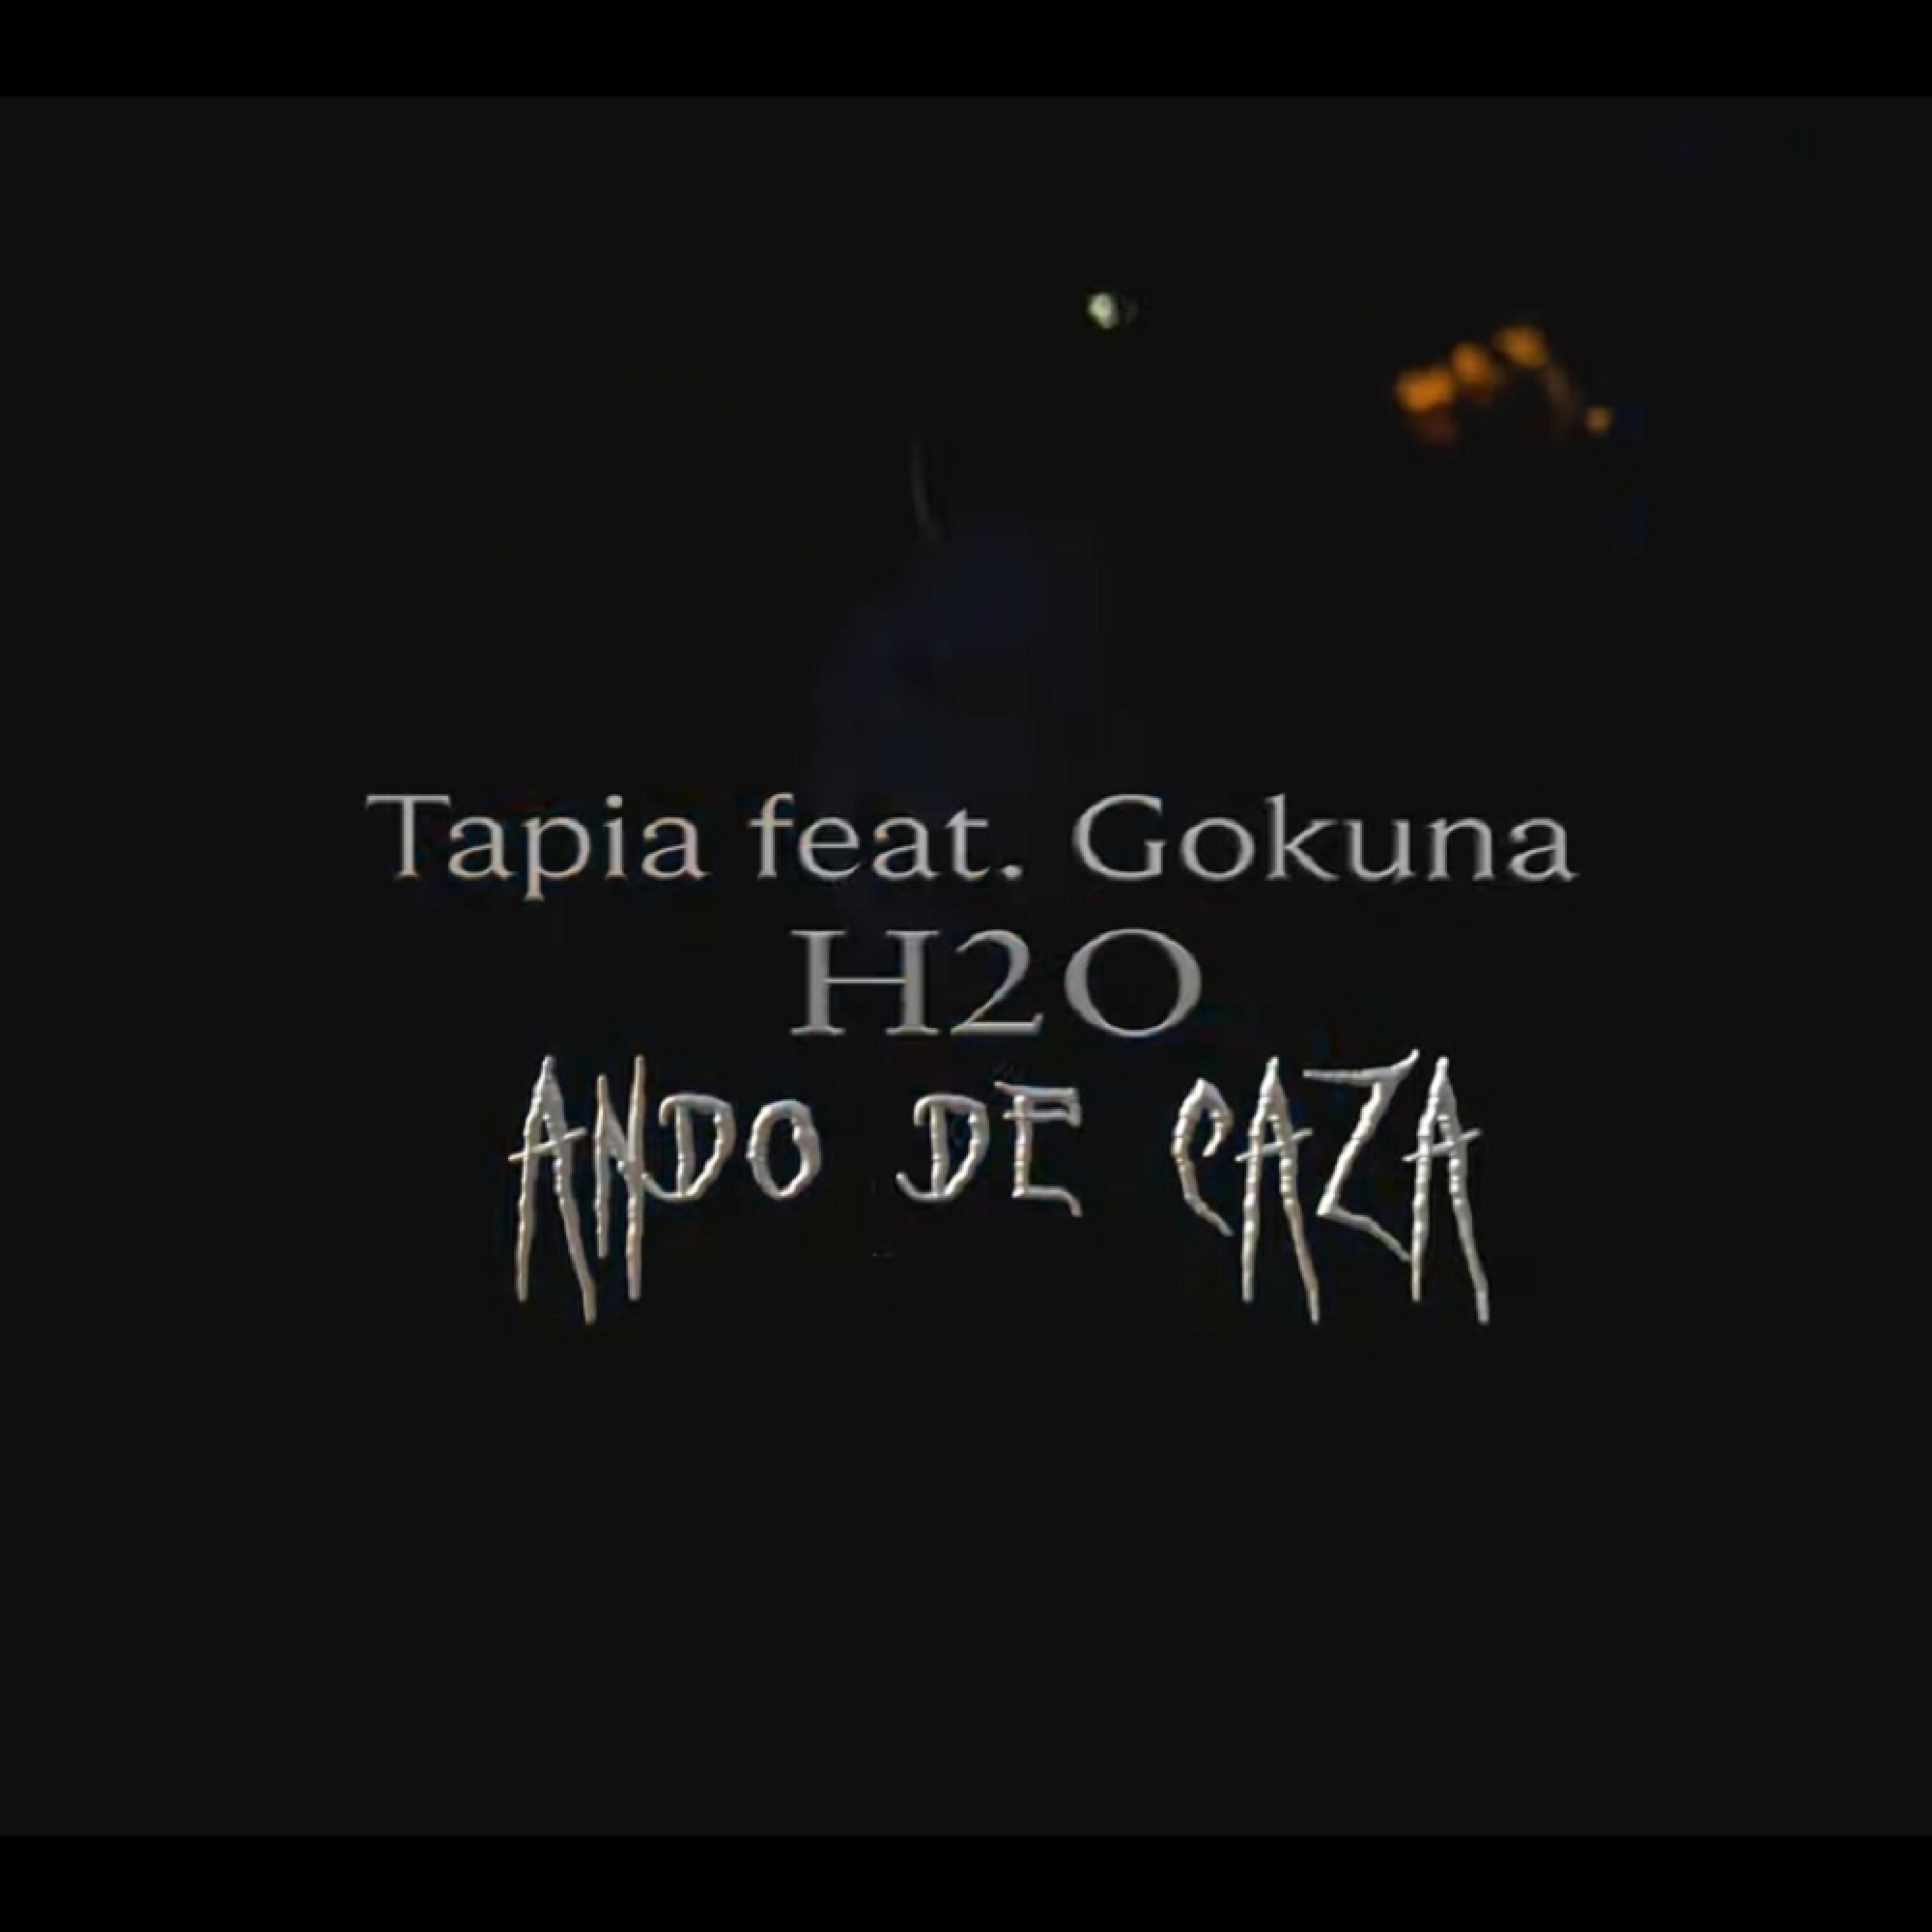 Gokuna - Ando de Caza (feat. Tapia)